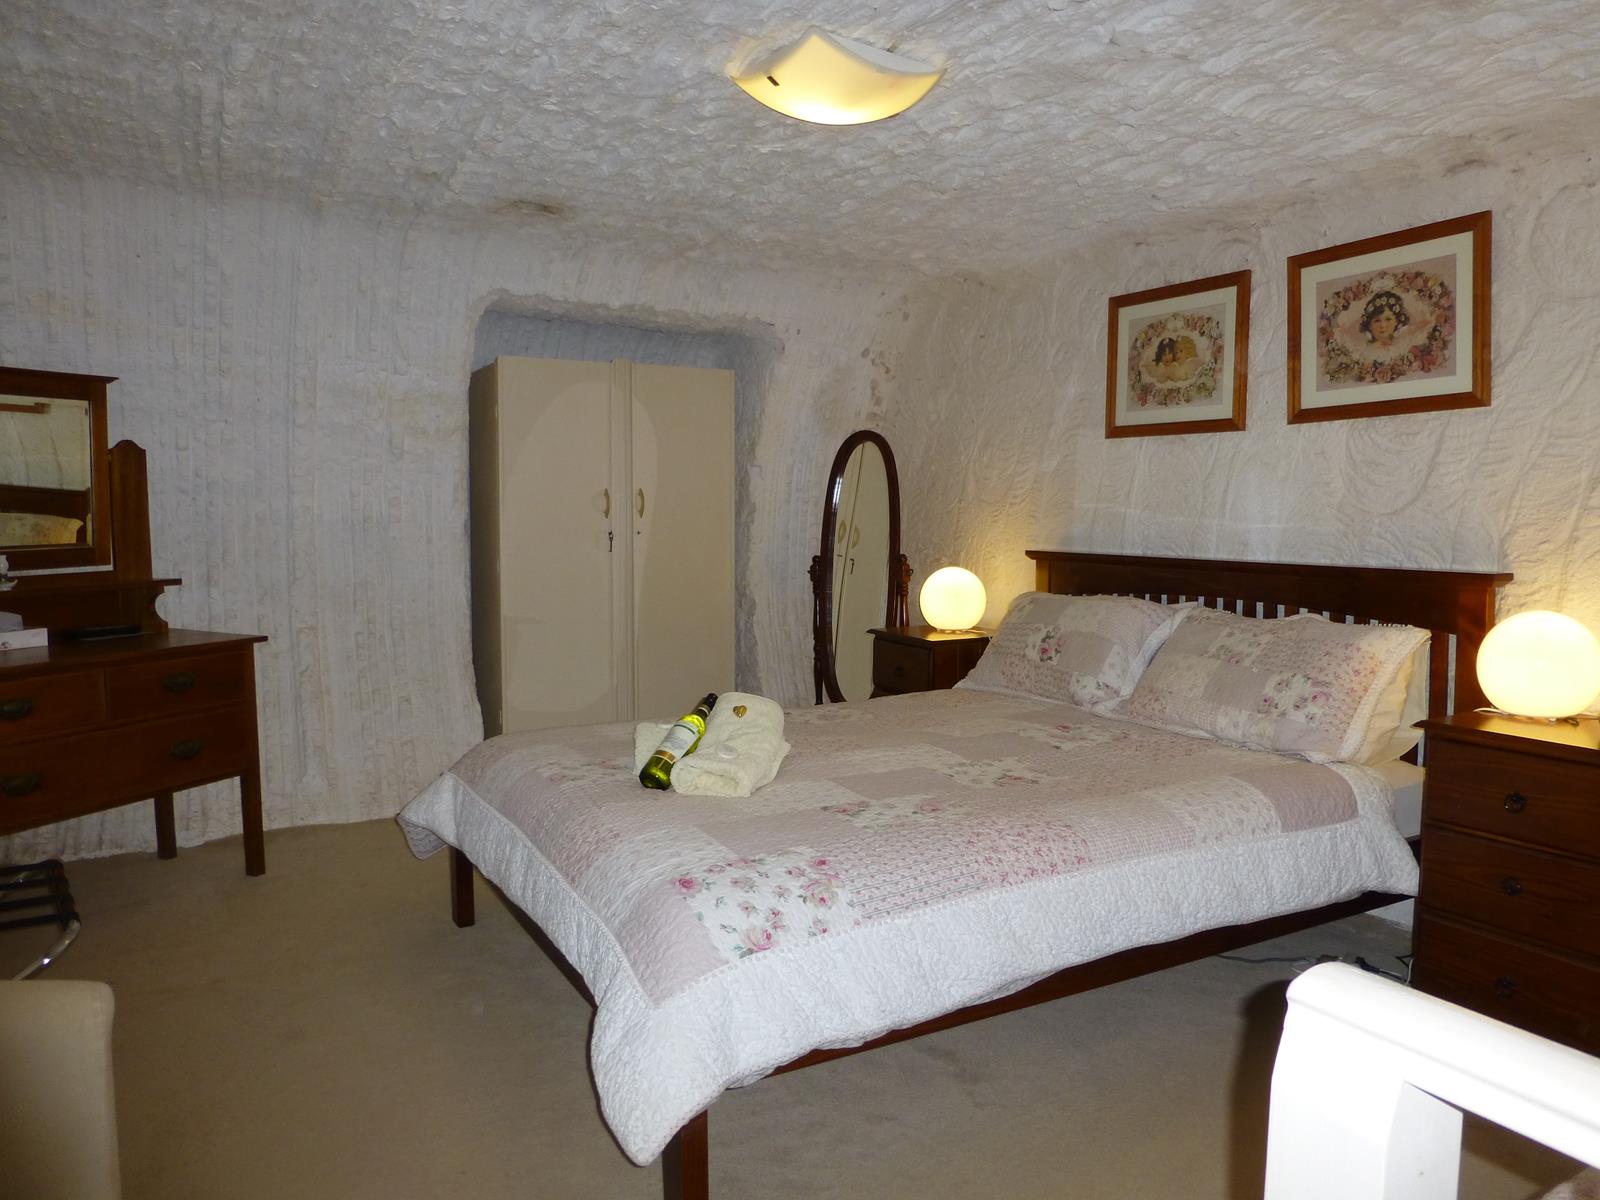 Underground Bed and Breakfast - Accommodation Resorts